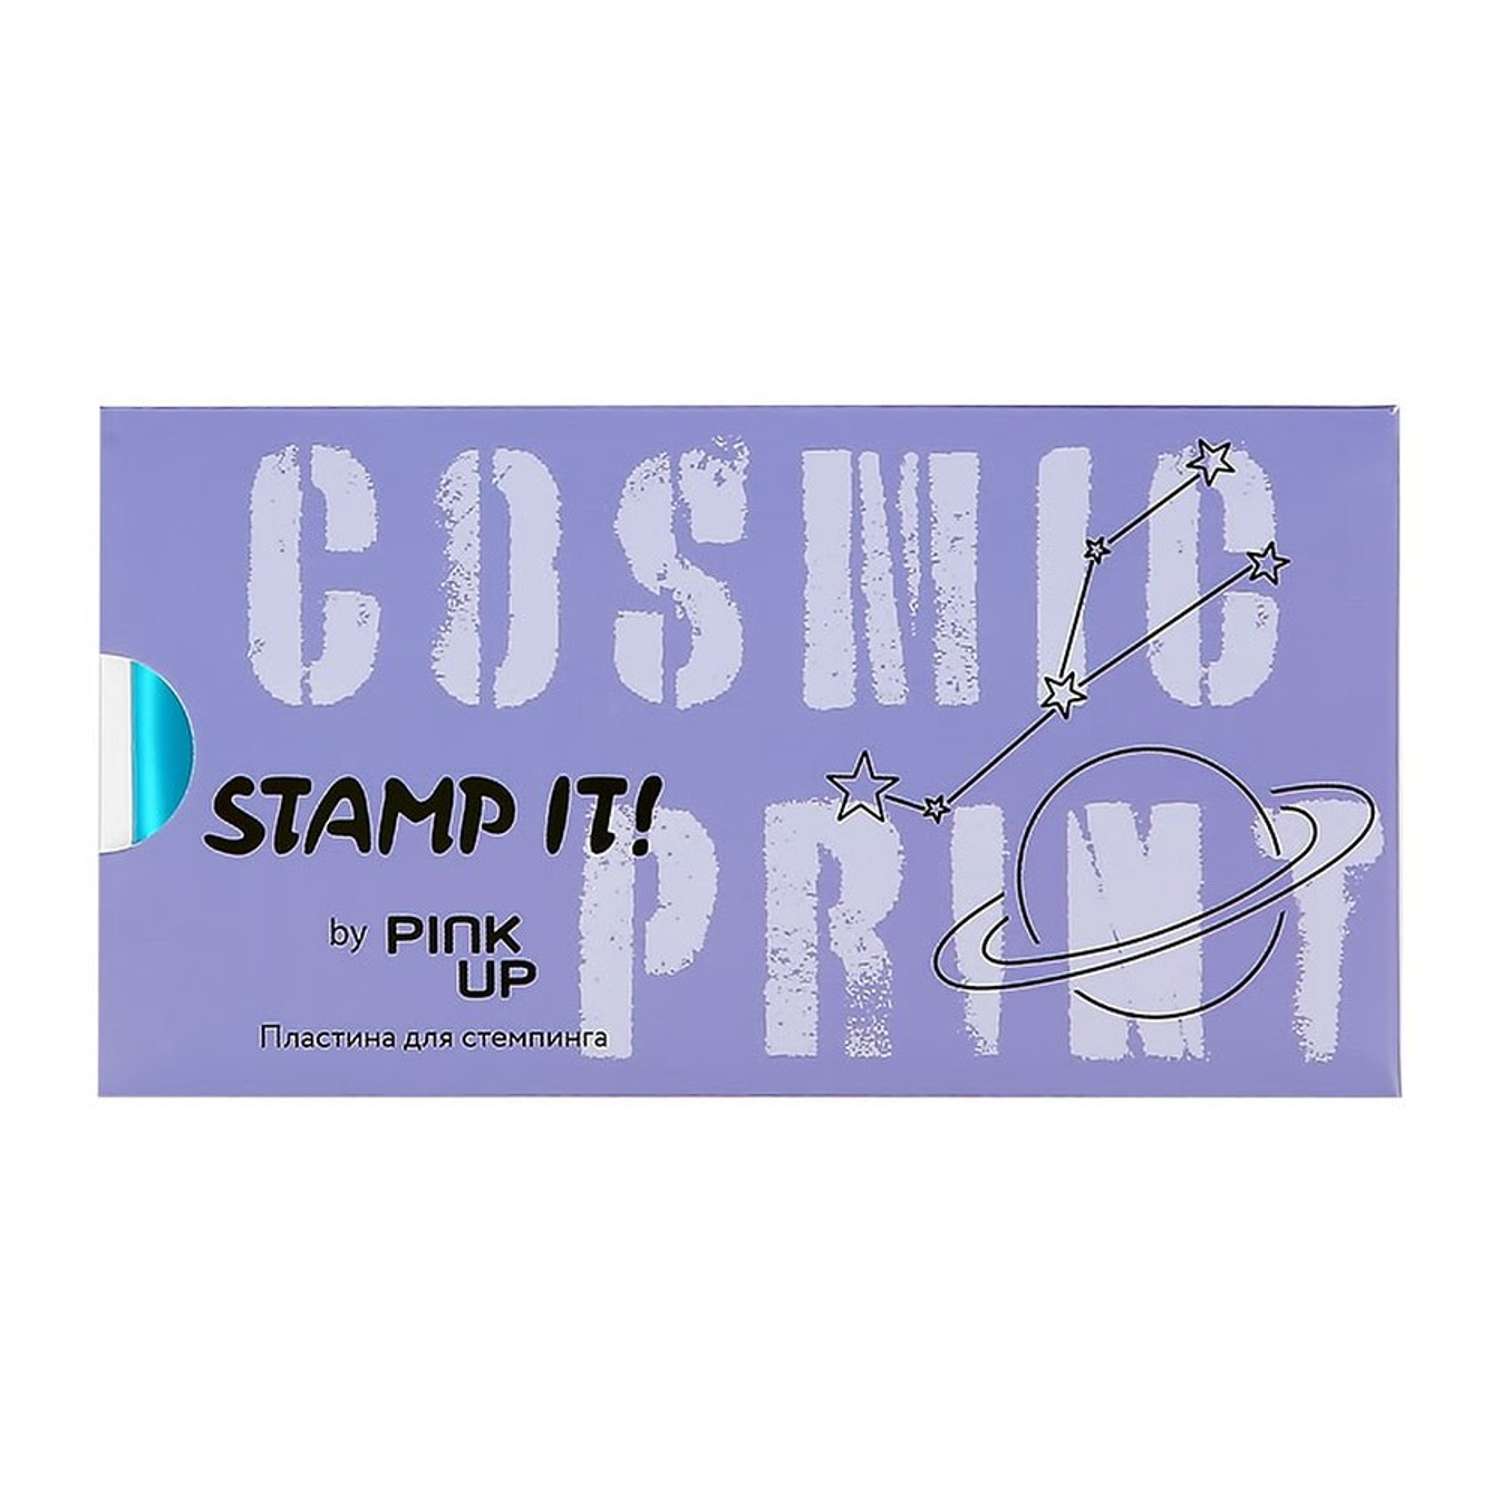 Пластина для стемпинга Pink Up stamp it! cosmic print - фото 3